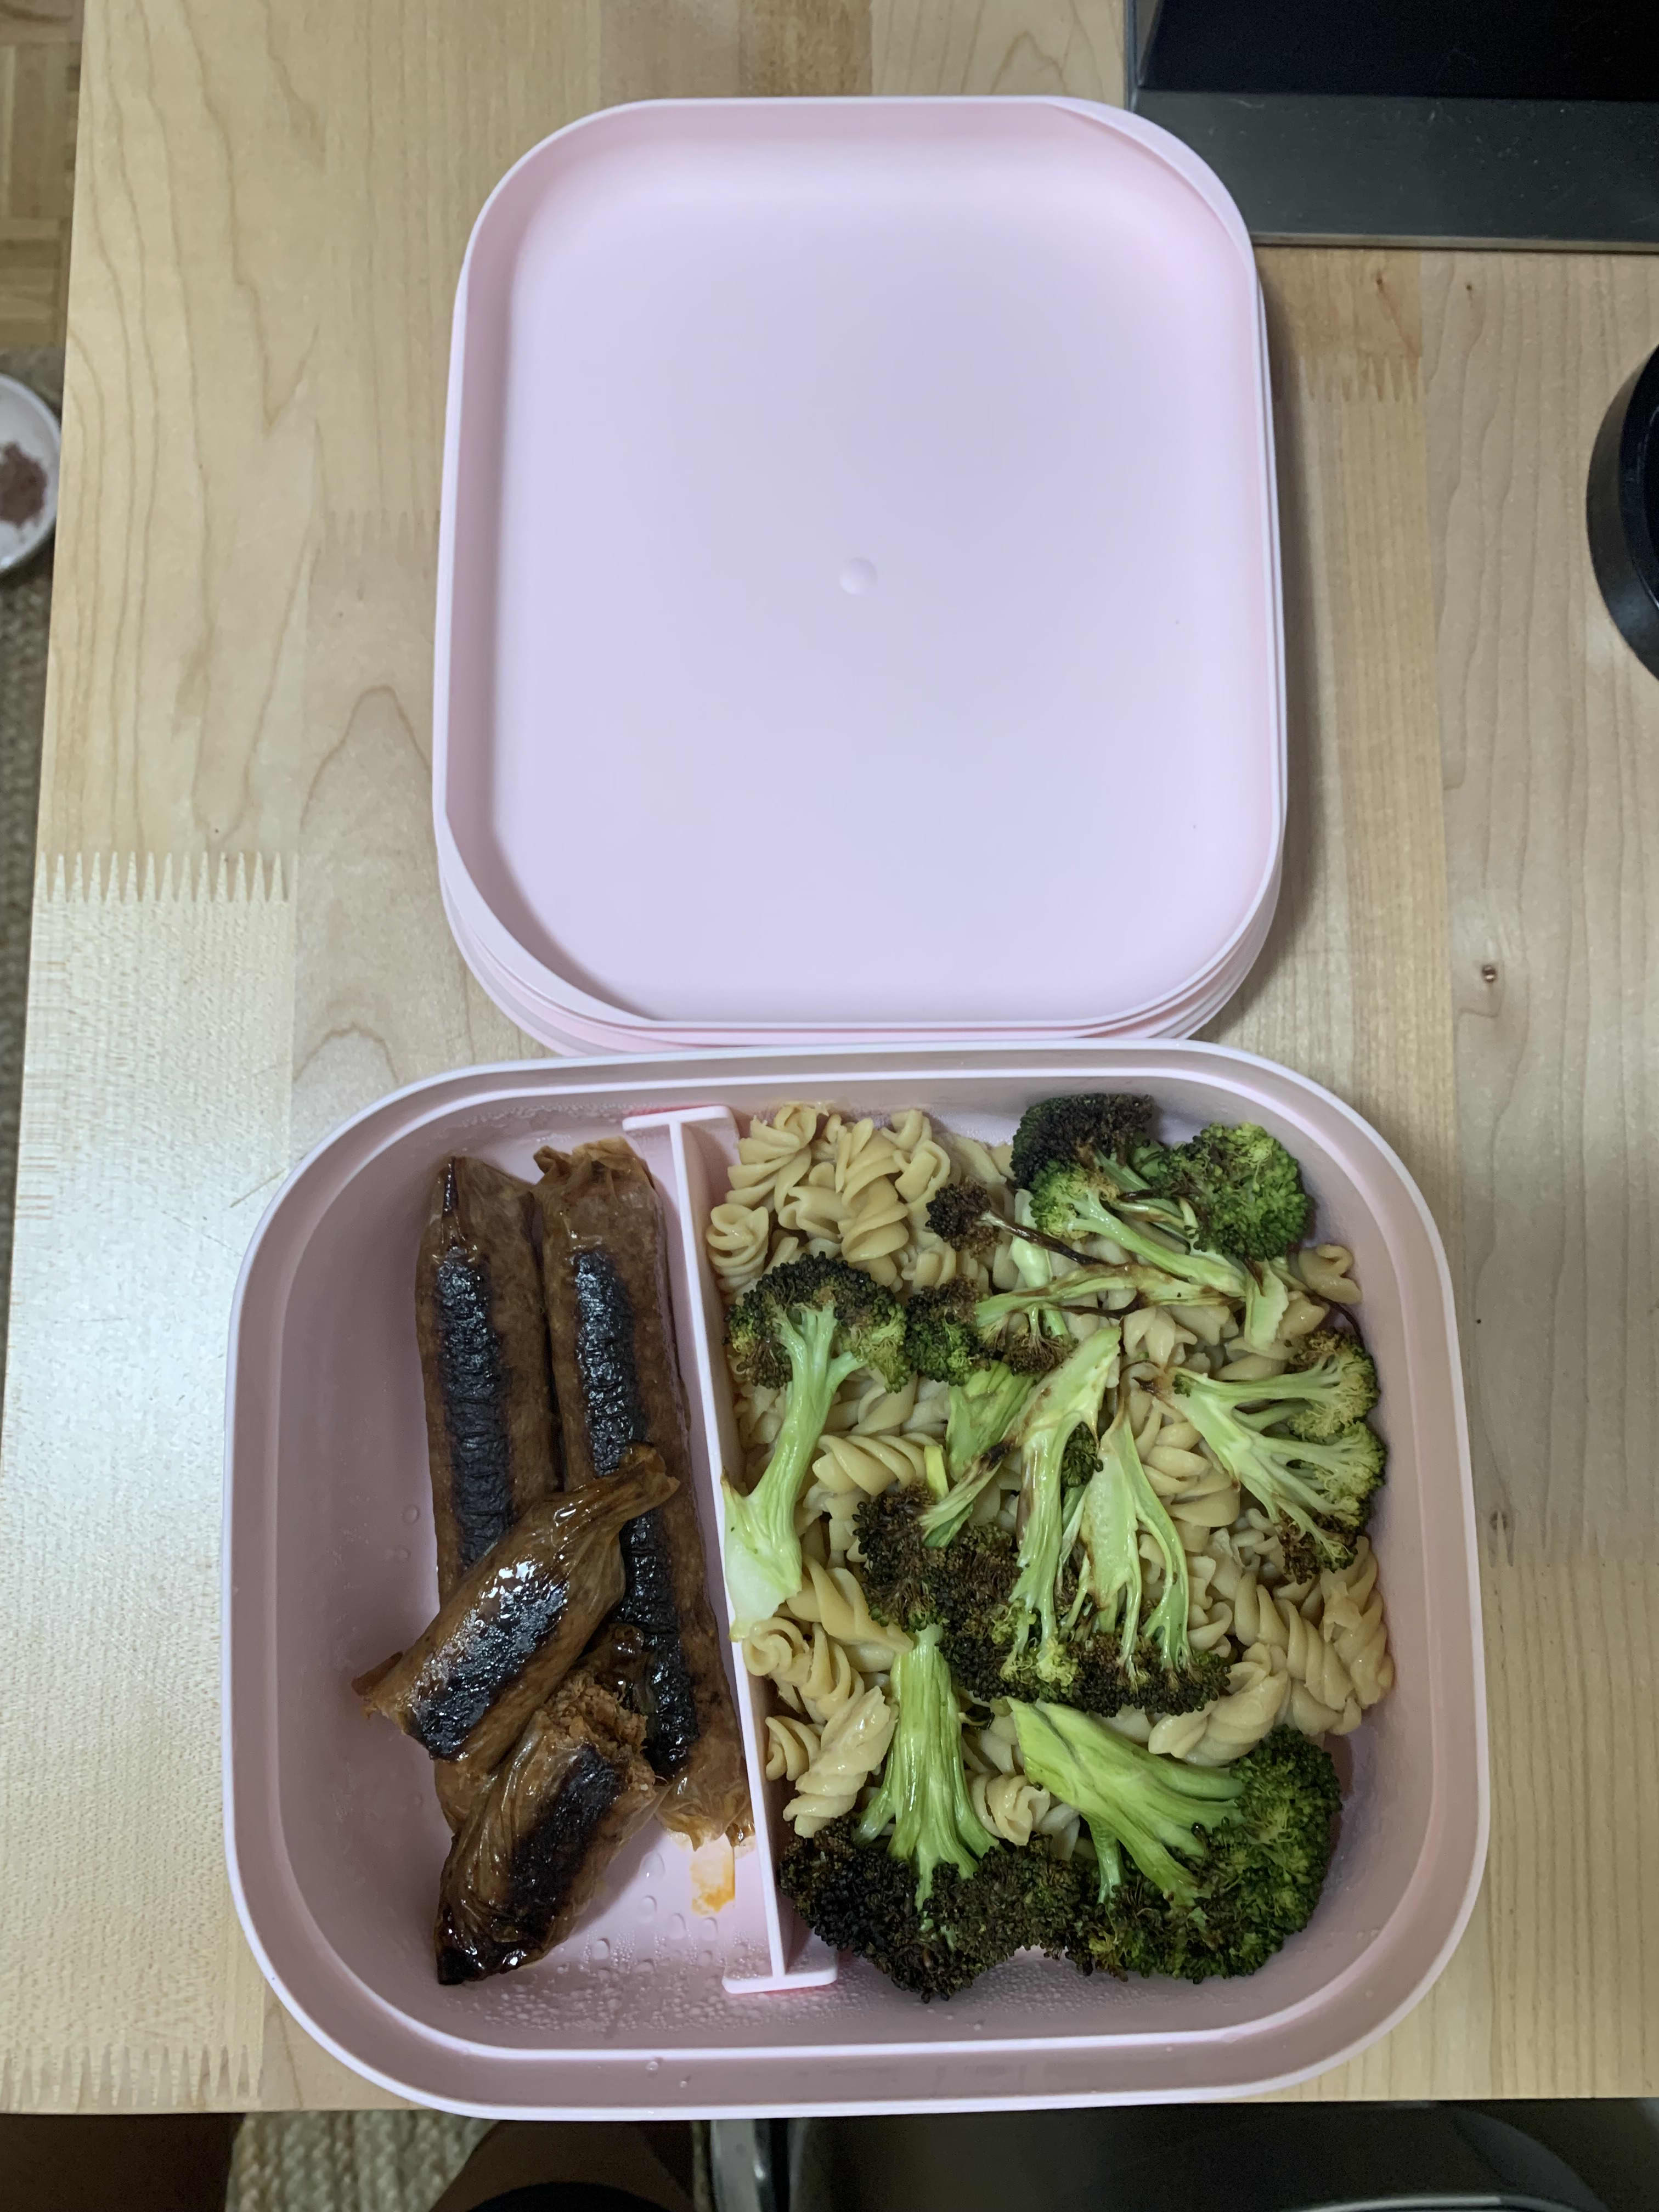 Buy W&P Porter Lunch Box, 3 Compartment Bento Box Style Portable